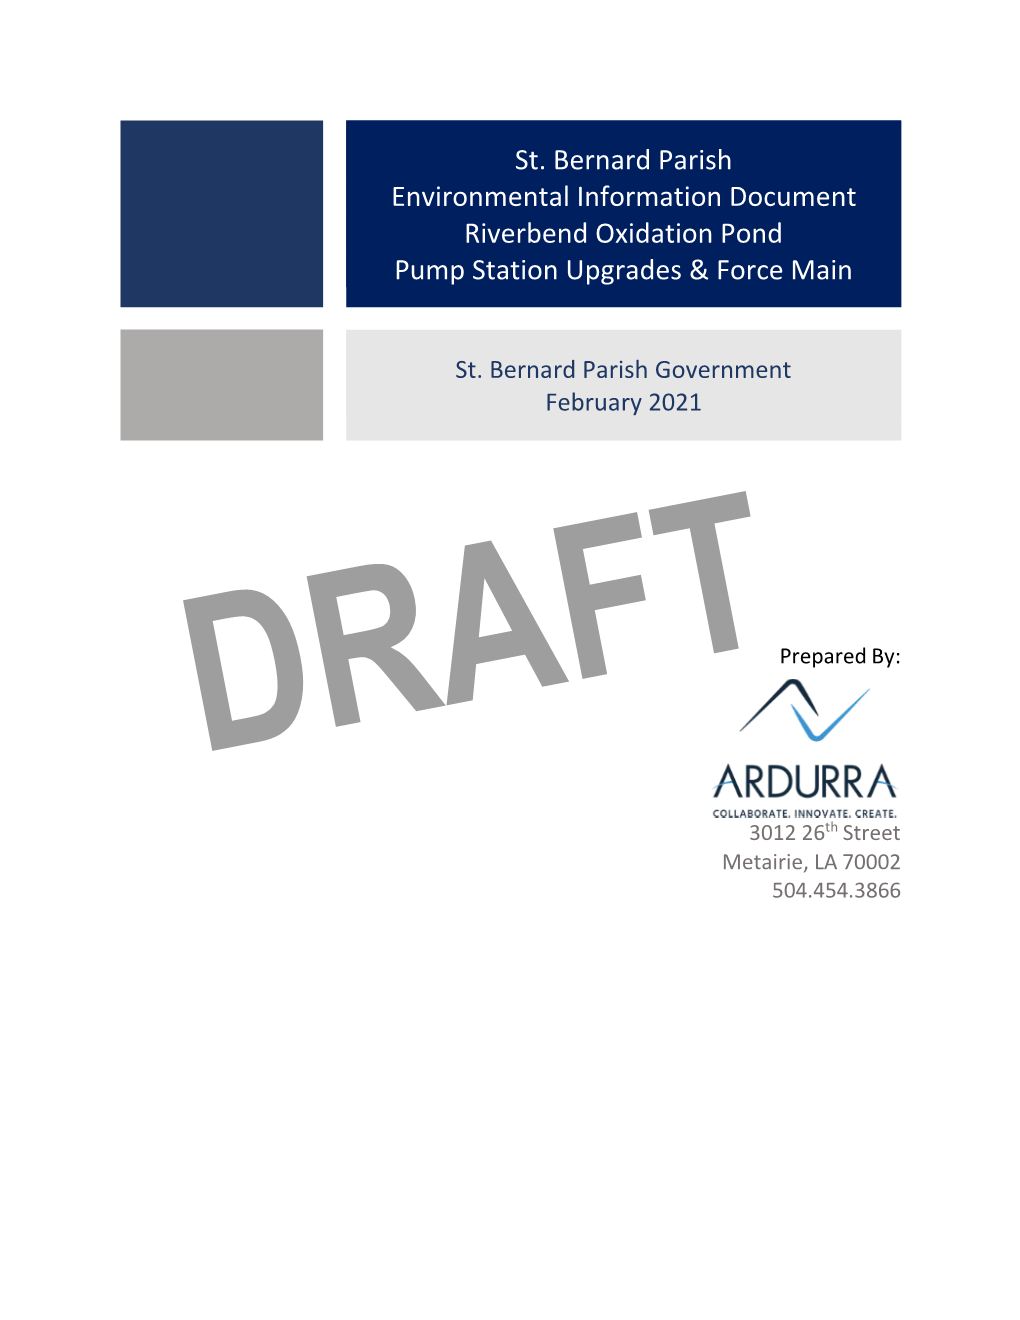 St. Bernard Parish Environmental Information Document Riverbend Oxidation Pond Pump Station Upgrades & Force Main